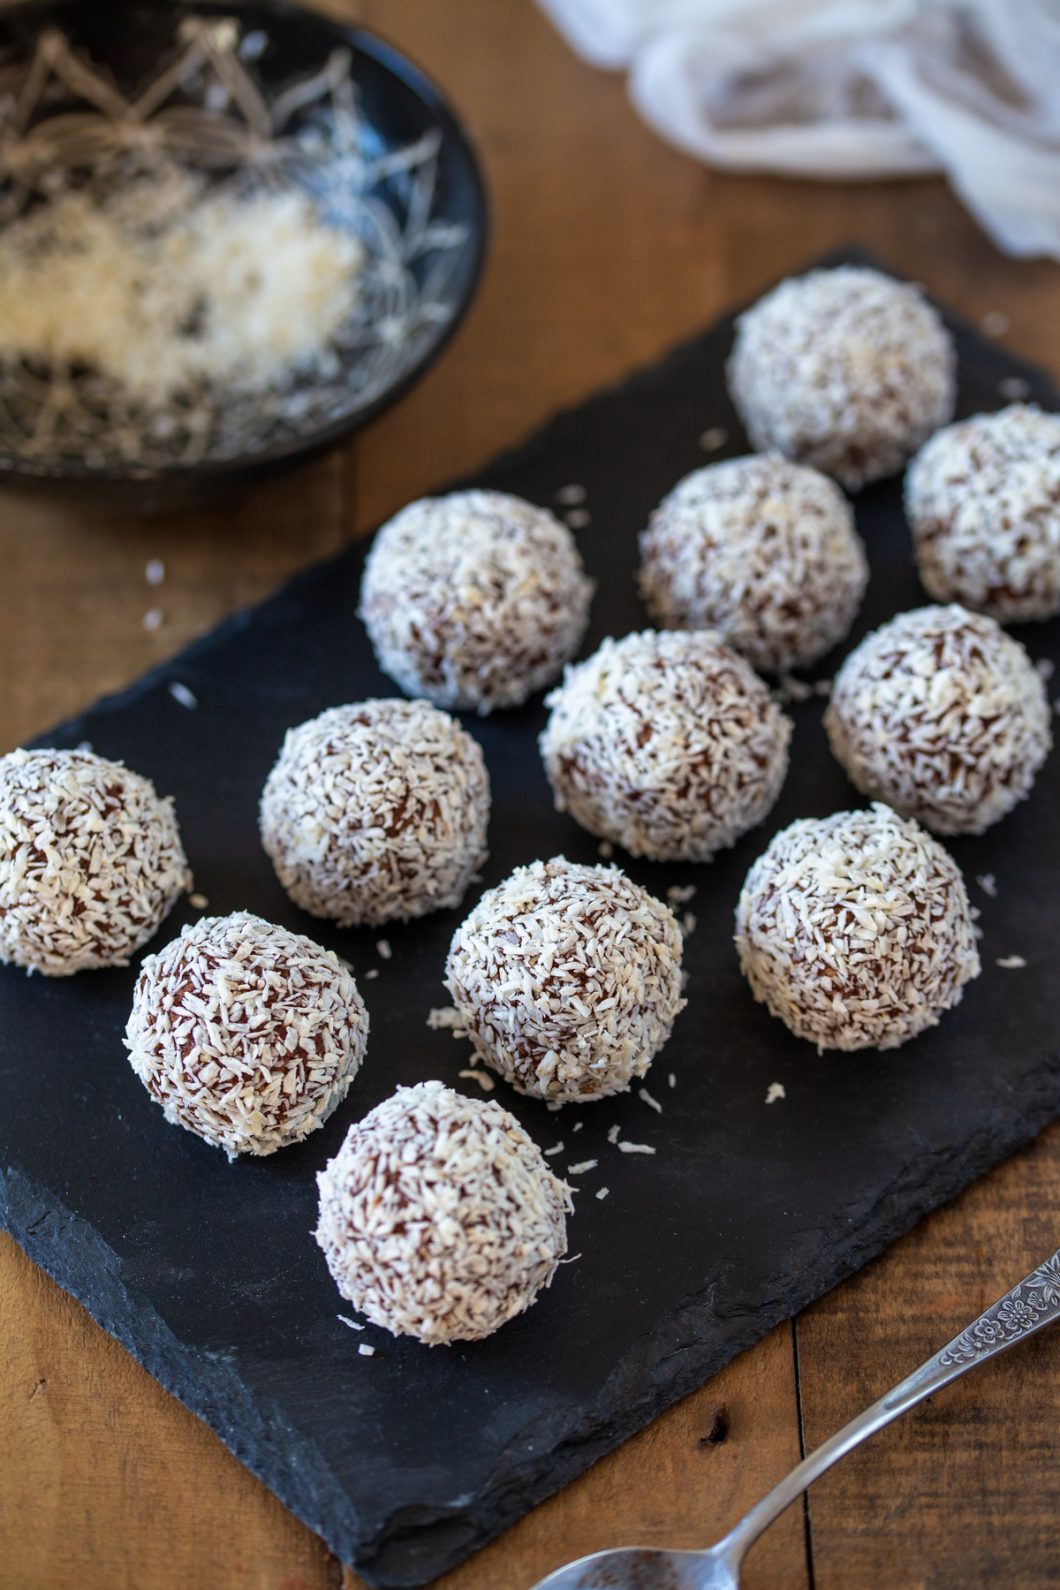 Coconut coated no-bake balls.